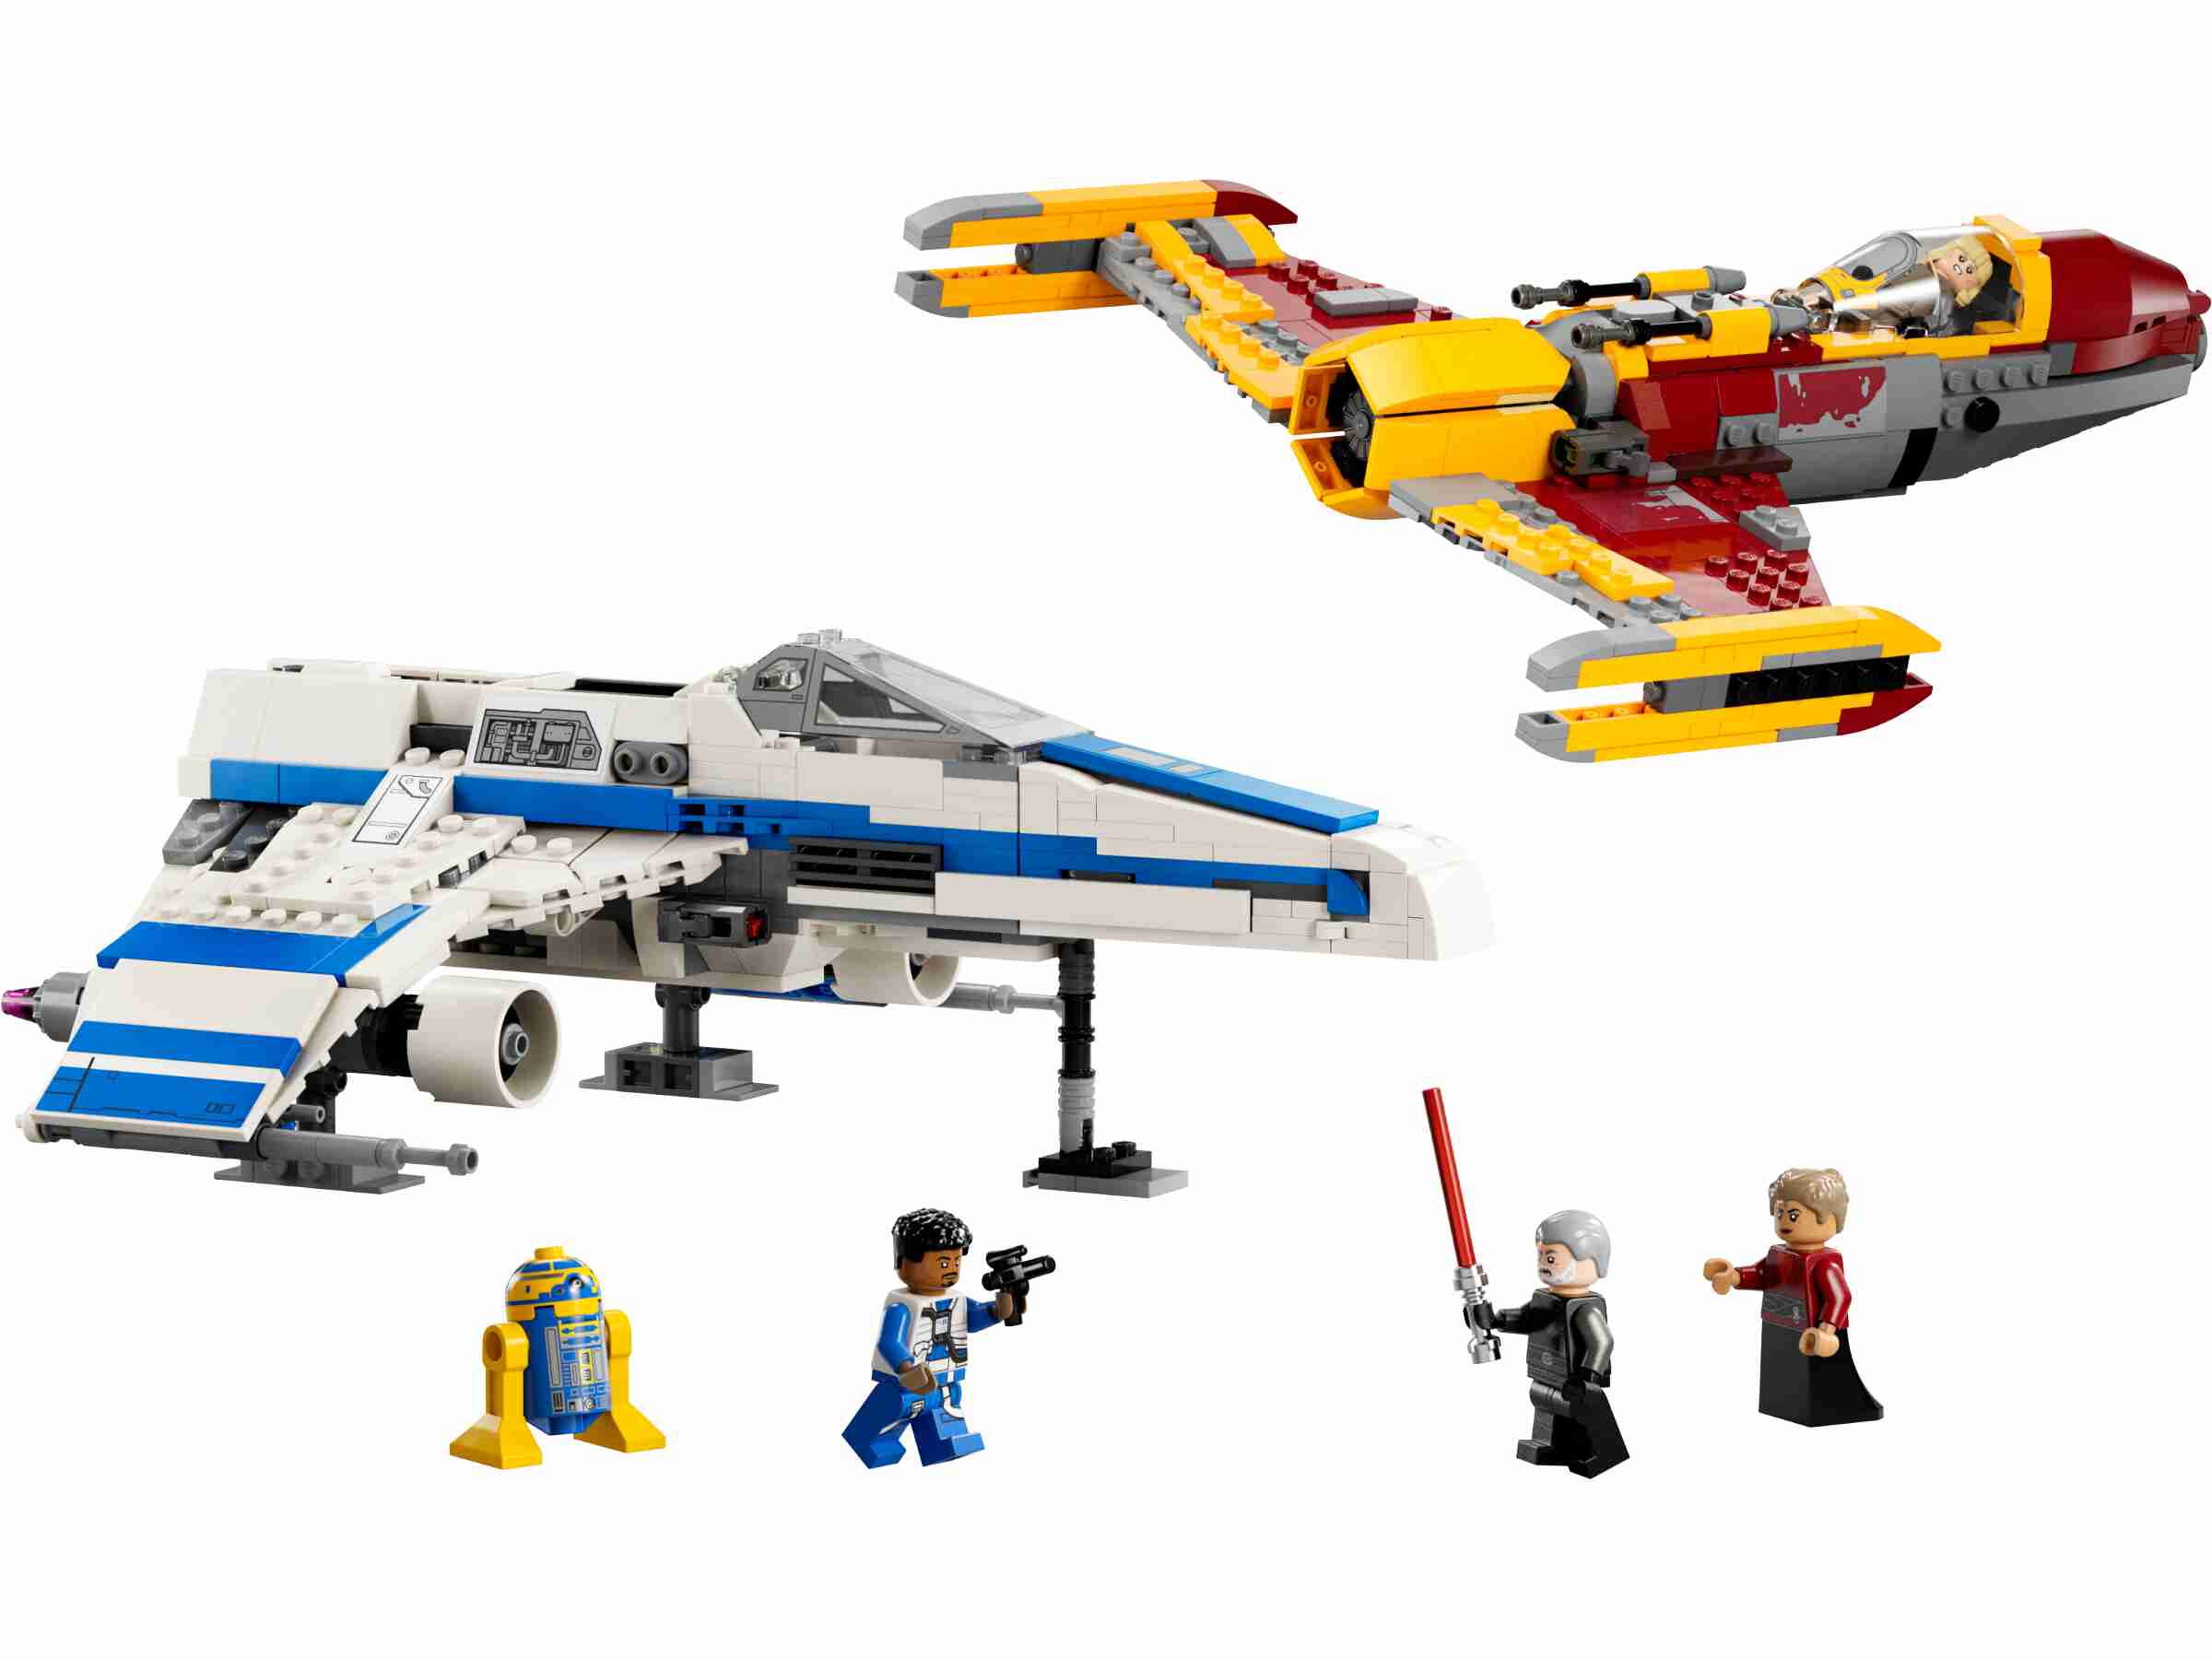 LEGO 75364 Star Wars New Republic E-Wing vs. Shin Hatis Starfighter